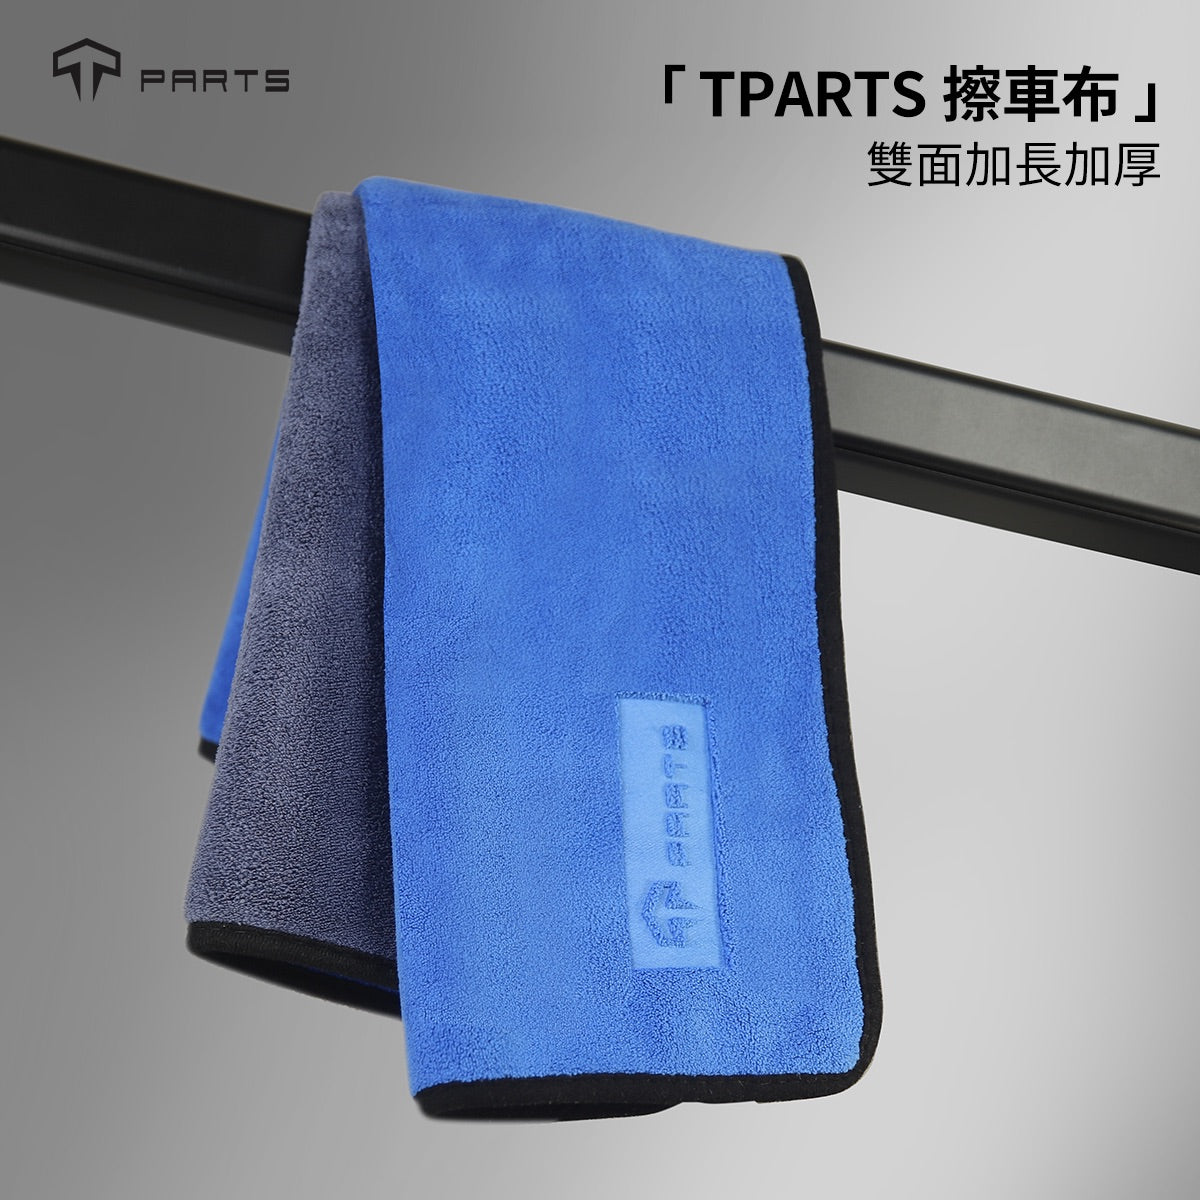 TParts 全車系專用擦車布